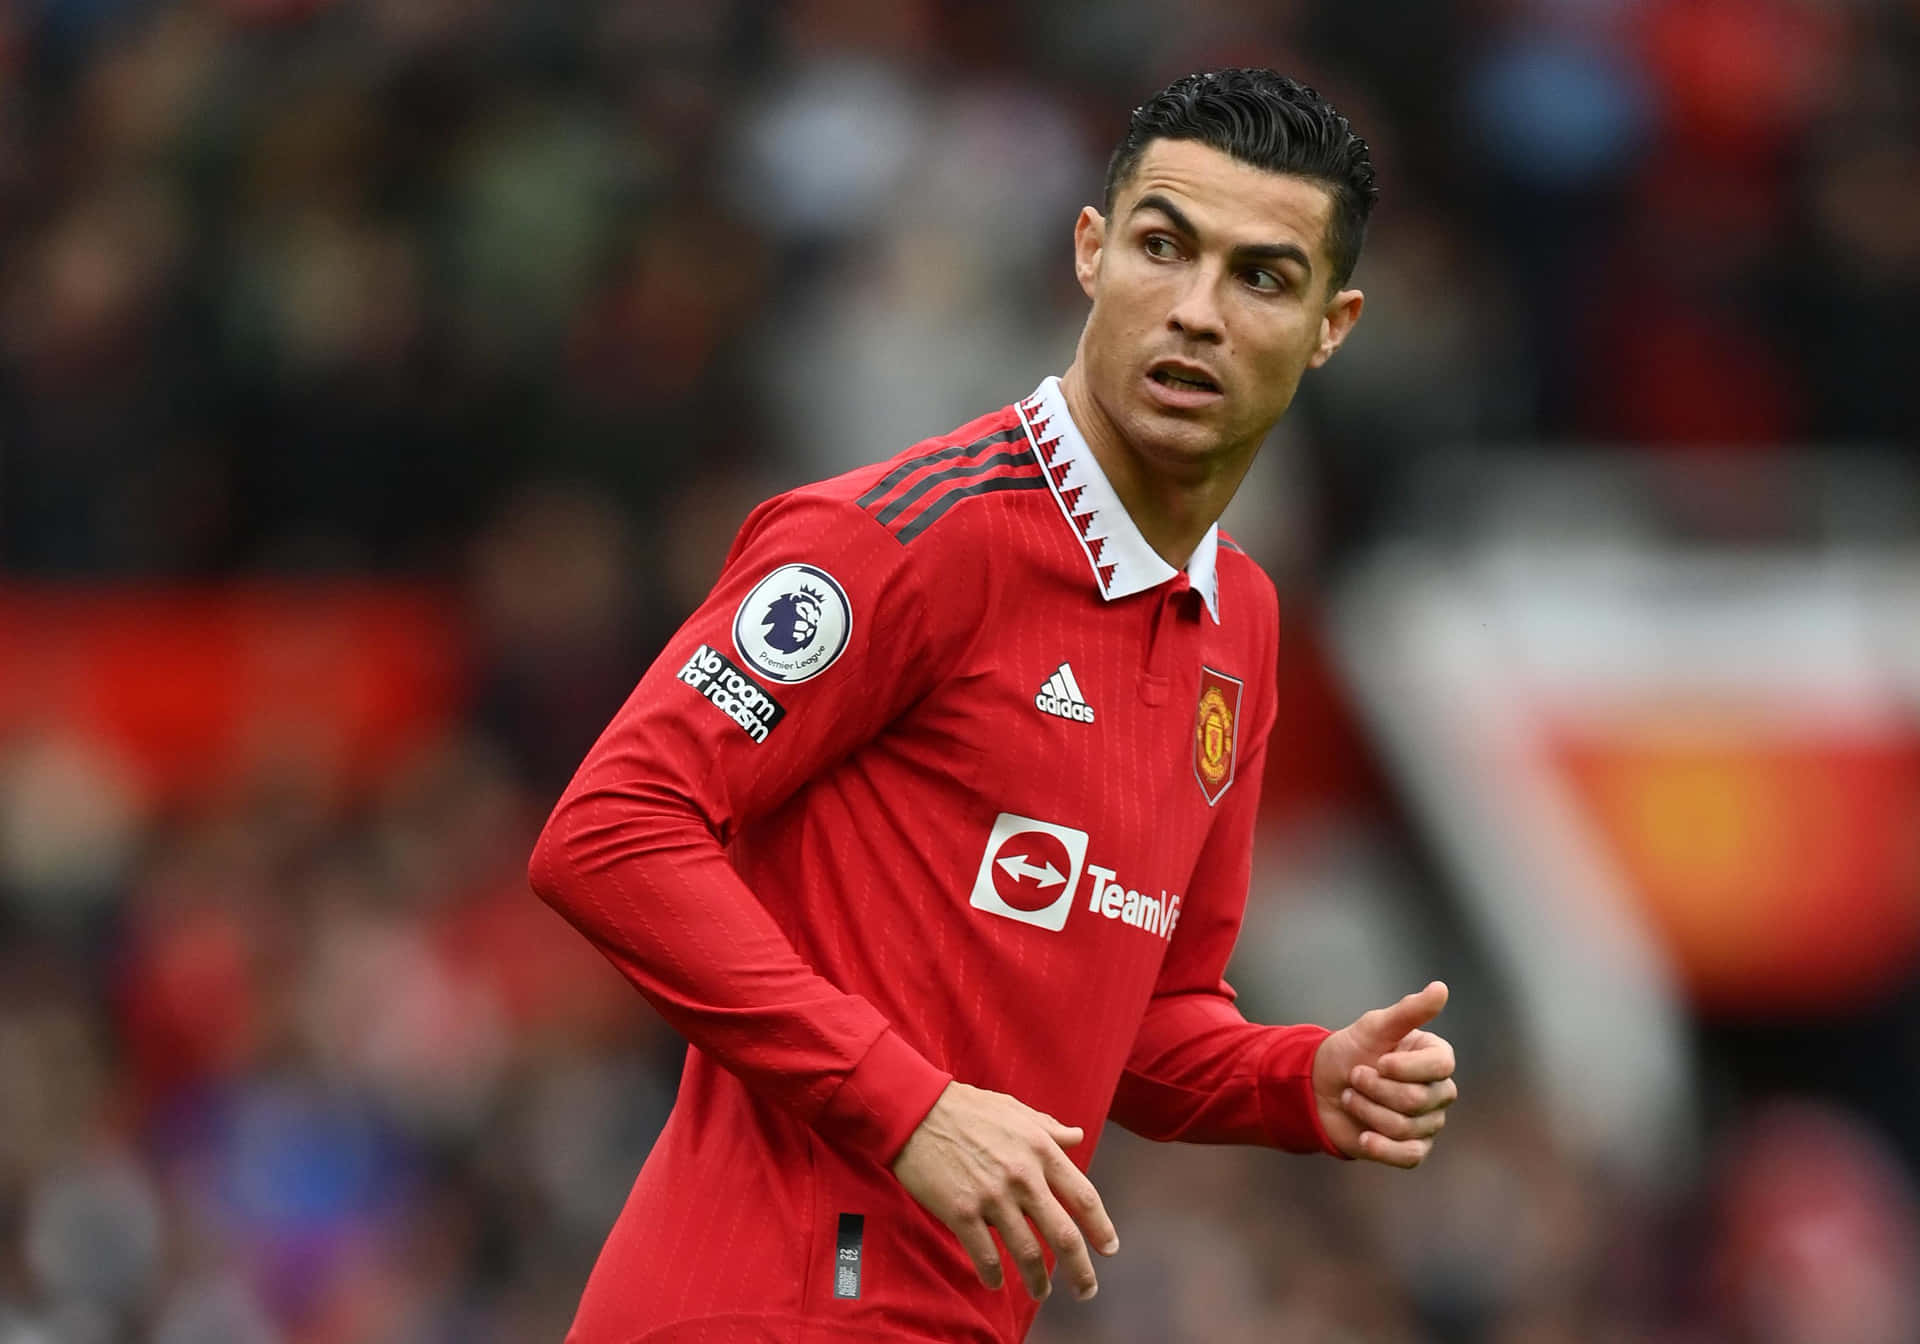 Soccer superstar Cristiano Ronaldo